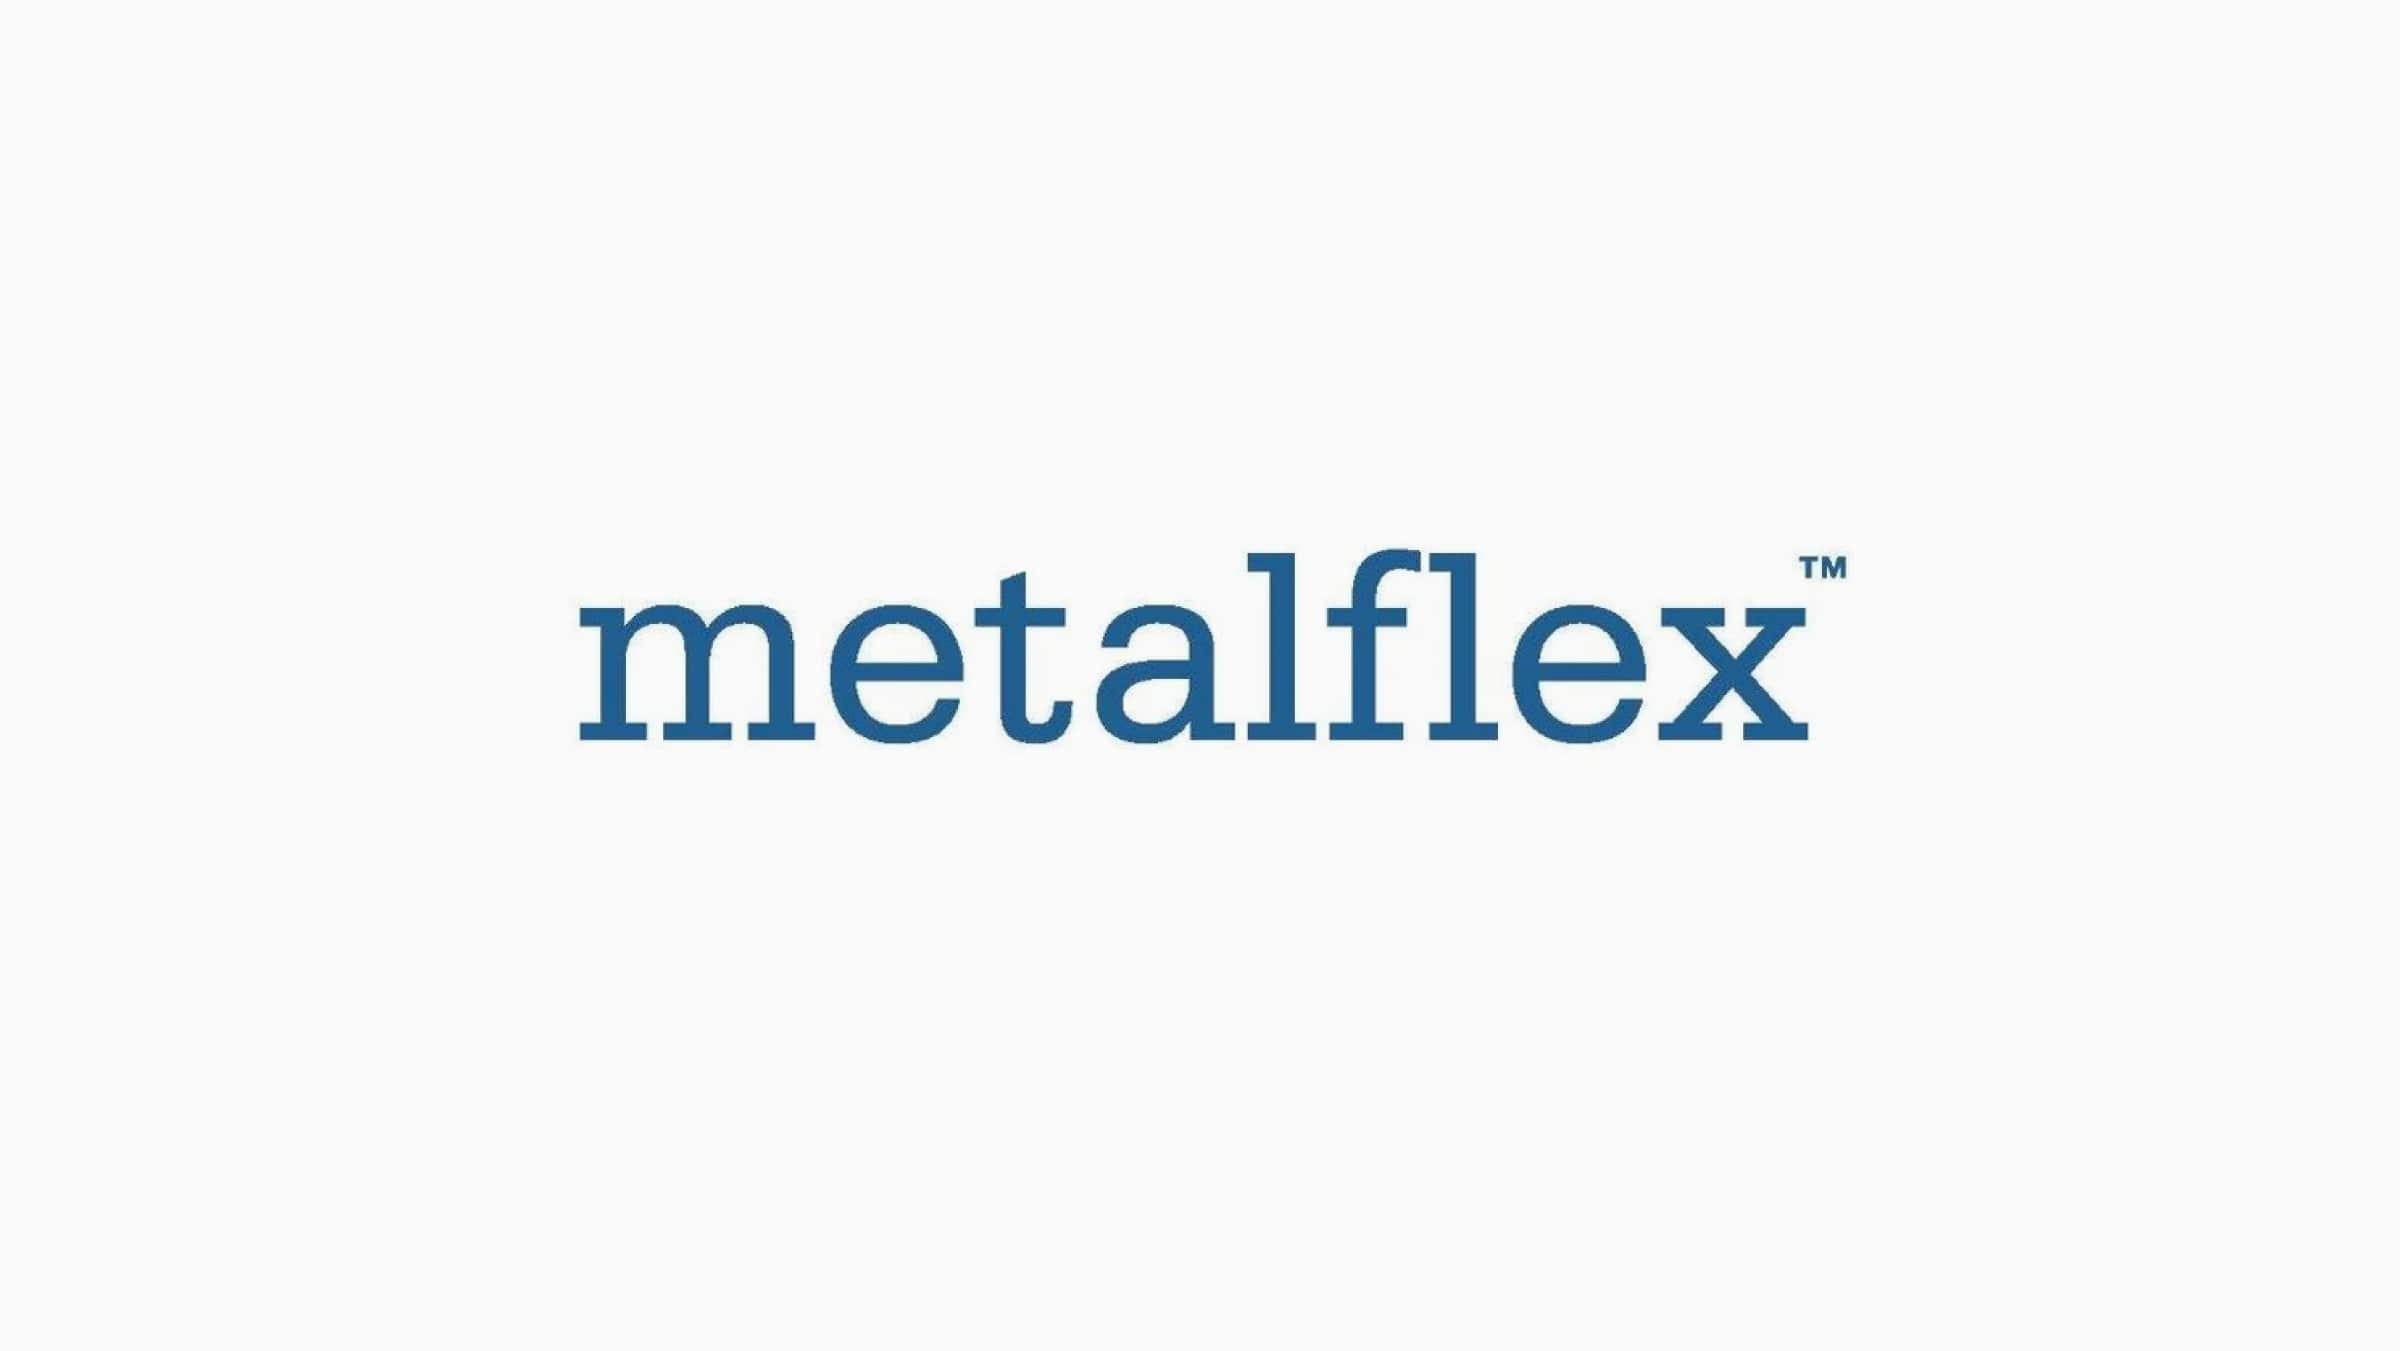 The Metalflex logo